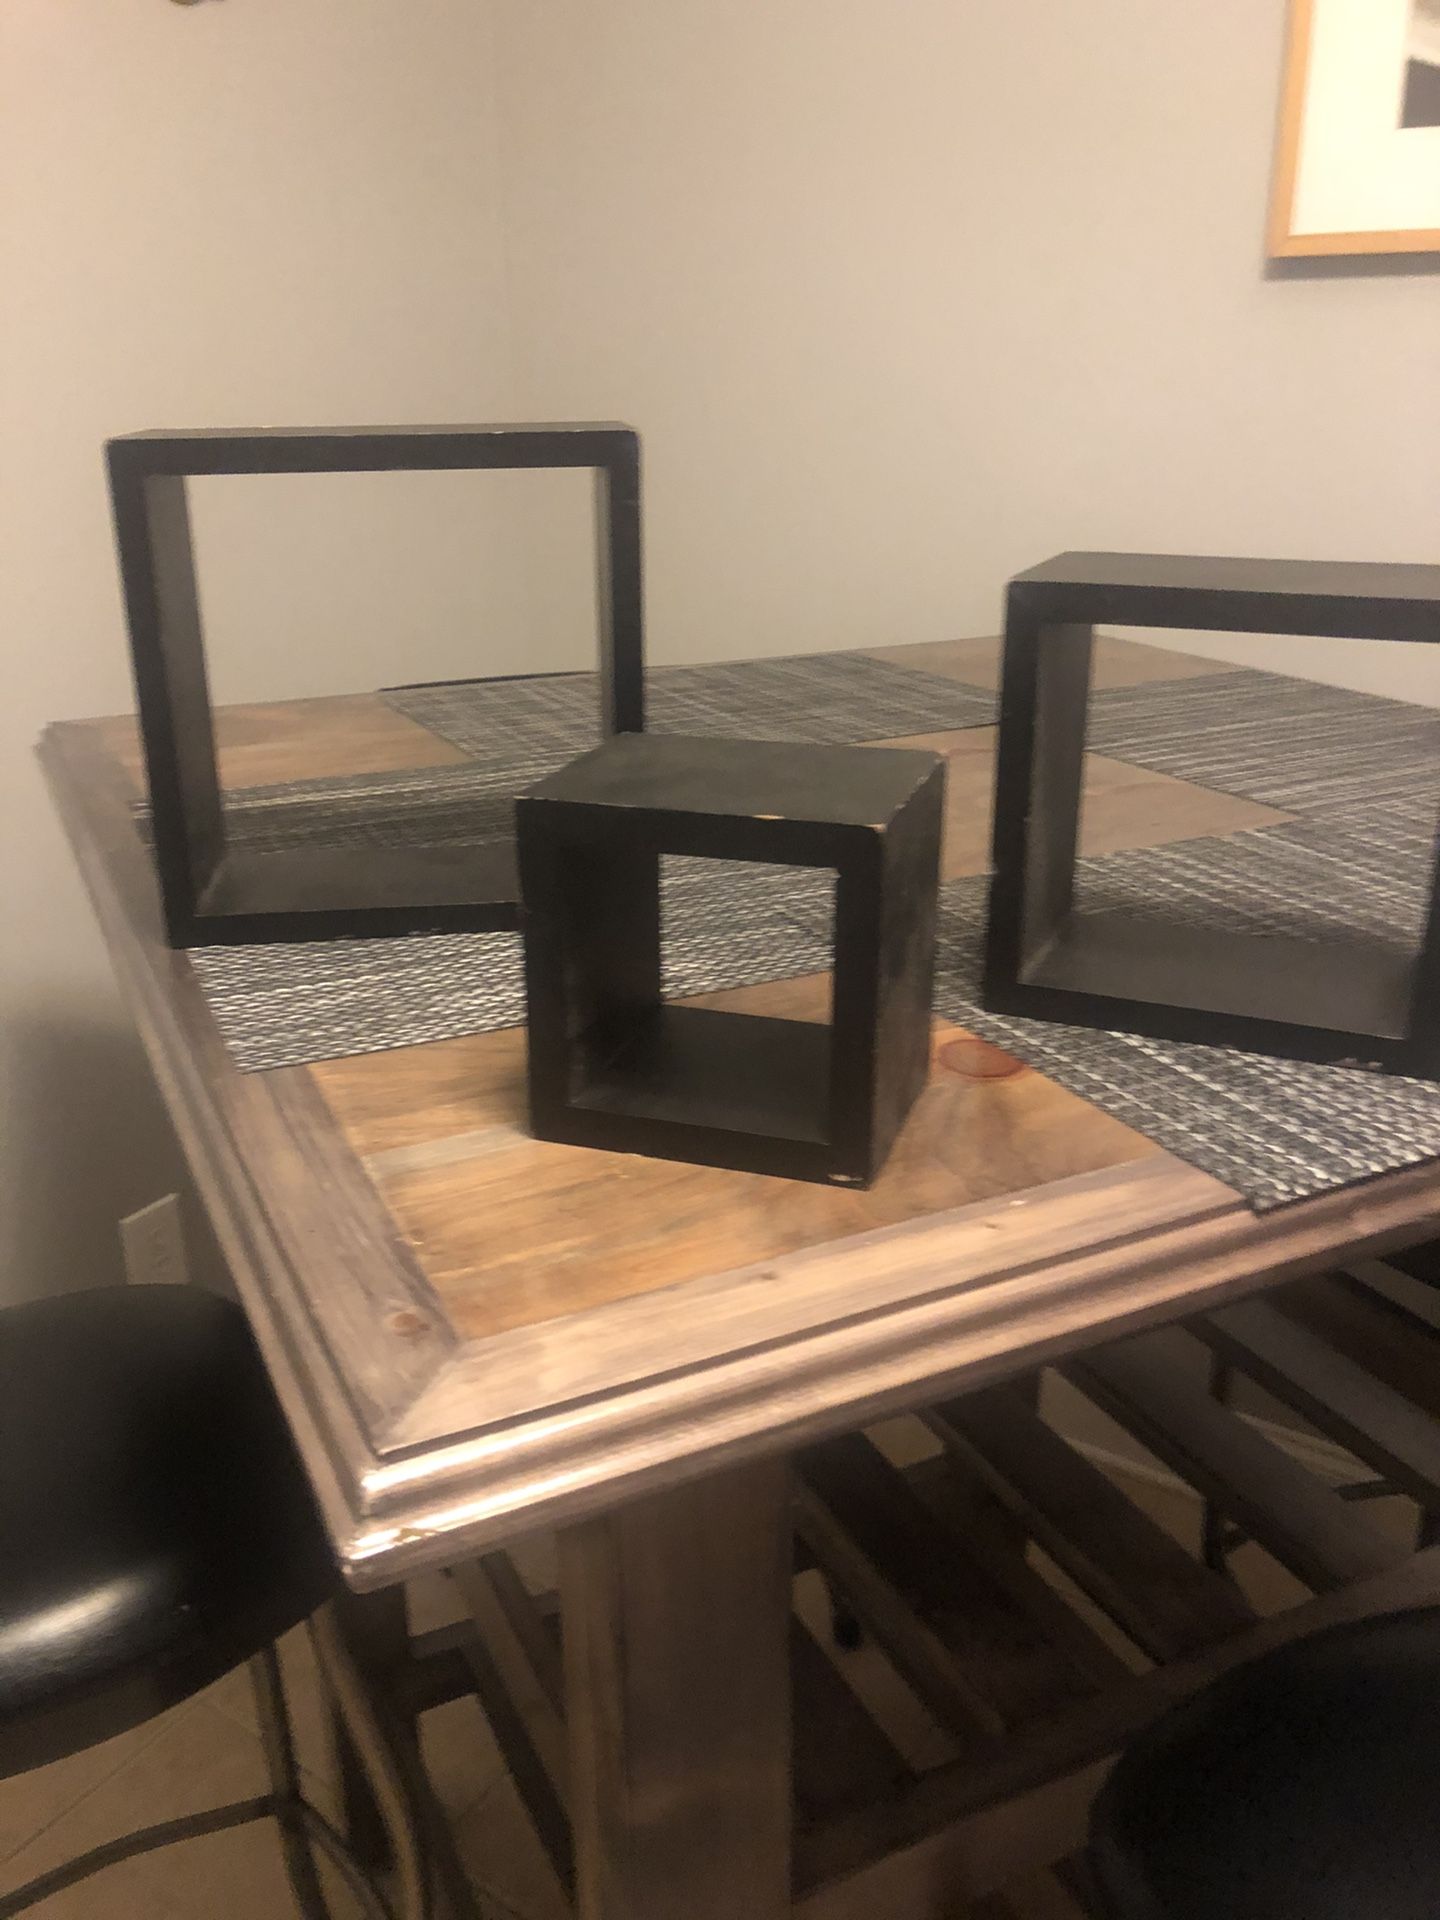 3 piece black wooden shelves